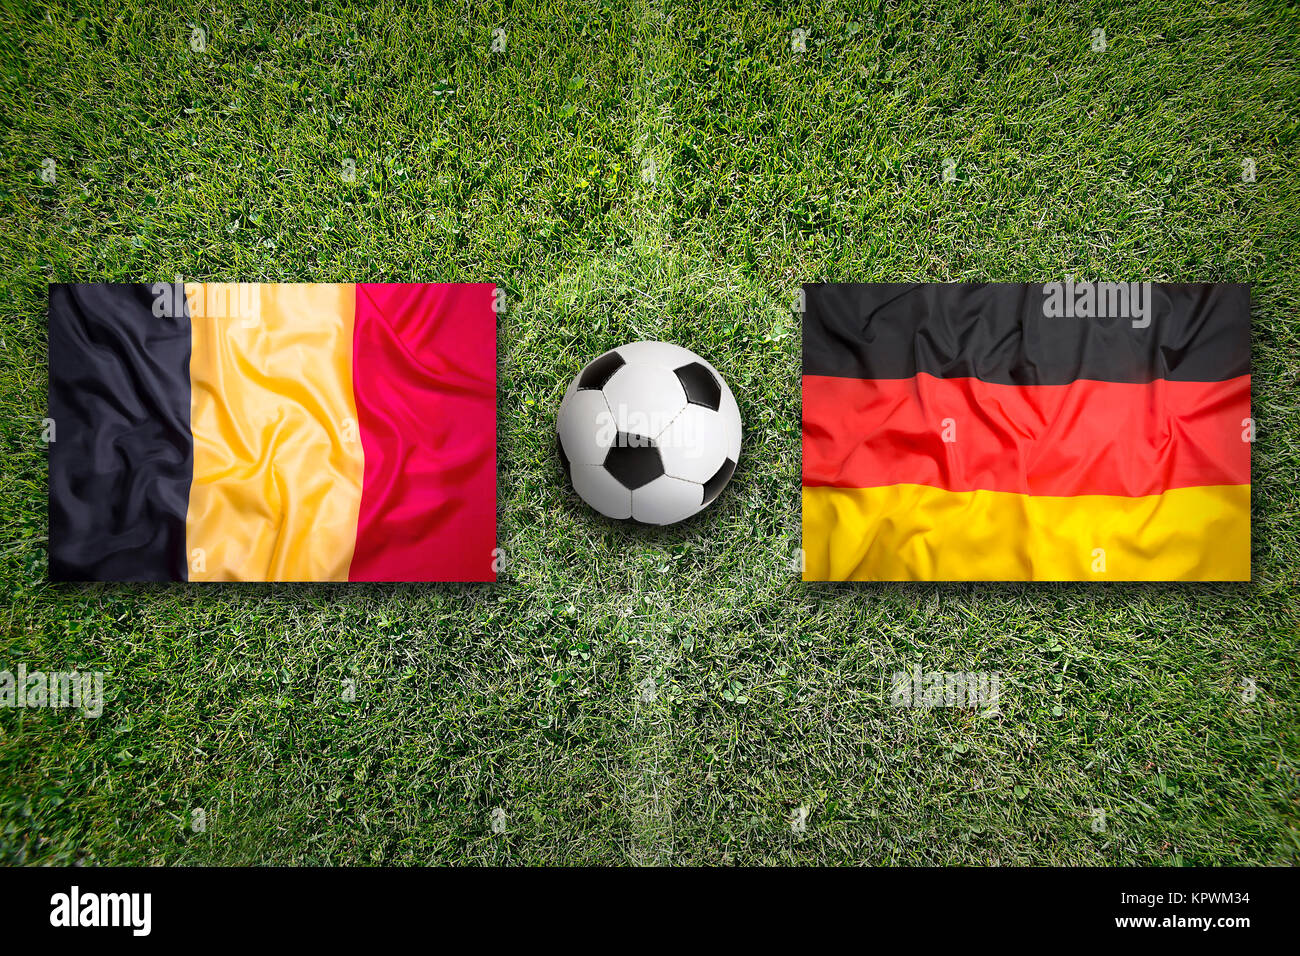 Belgien Gegen Deutschland Flaggen Auf Fussball Feld Stockfotografie Alamy